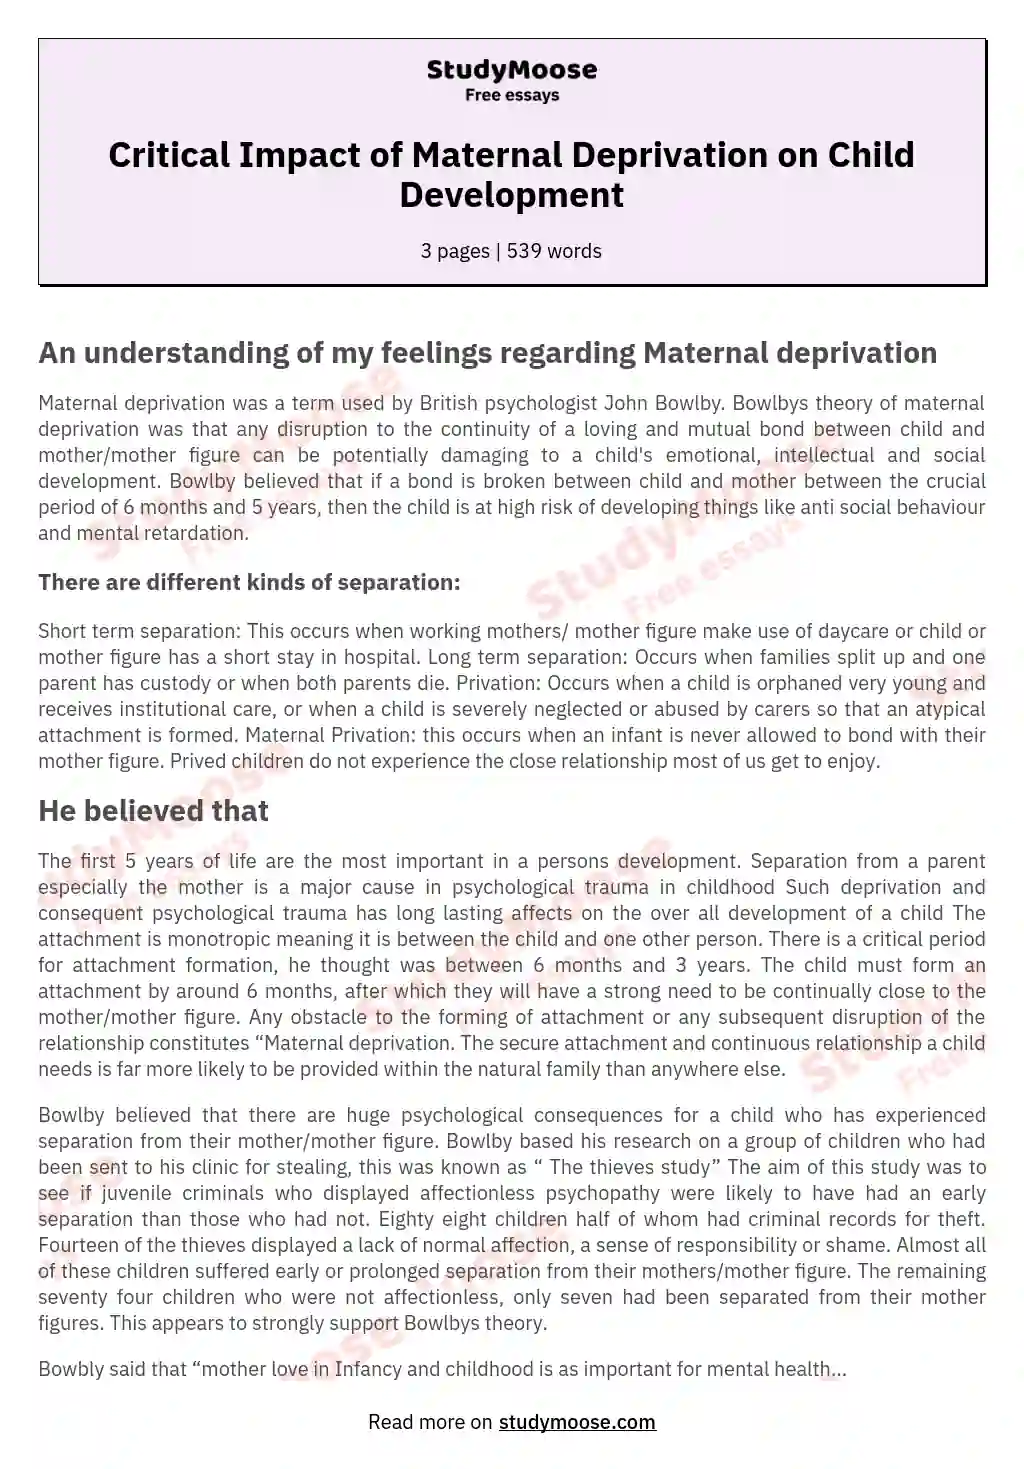 Critical Impact of Maternal Deprivation on Child Development essay